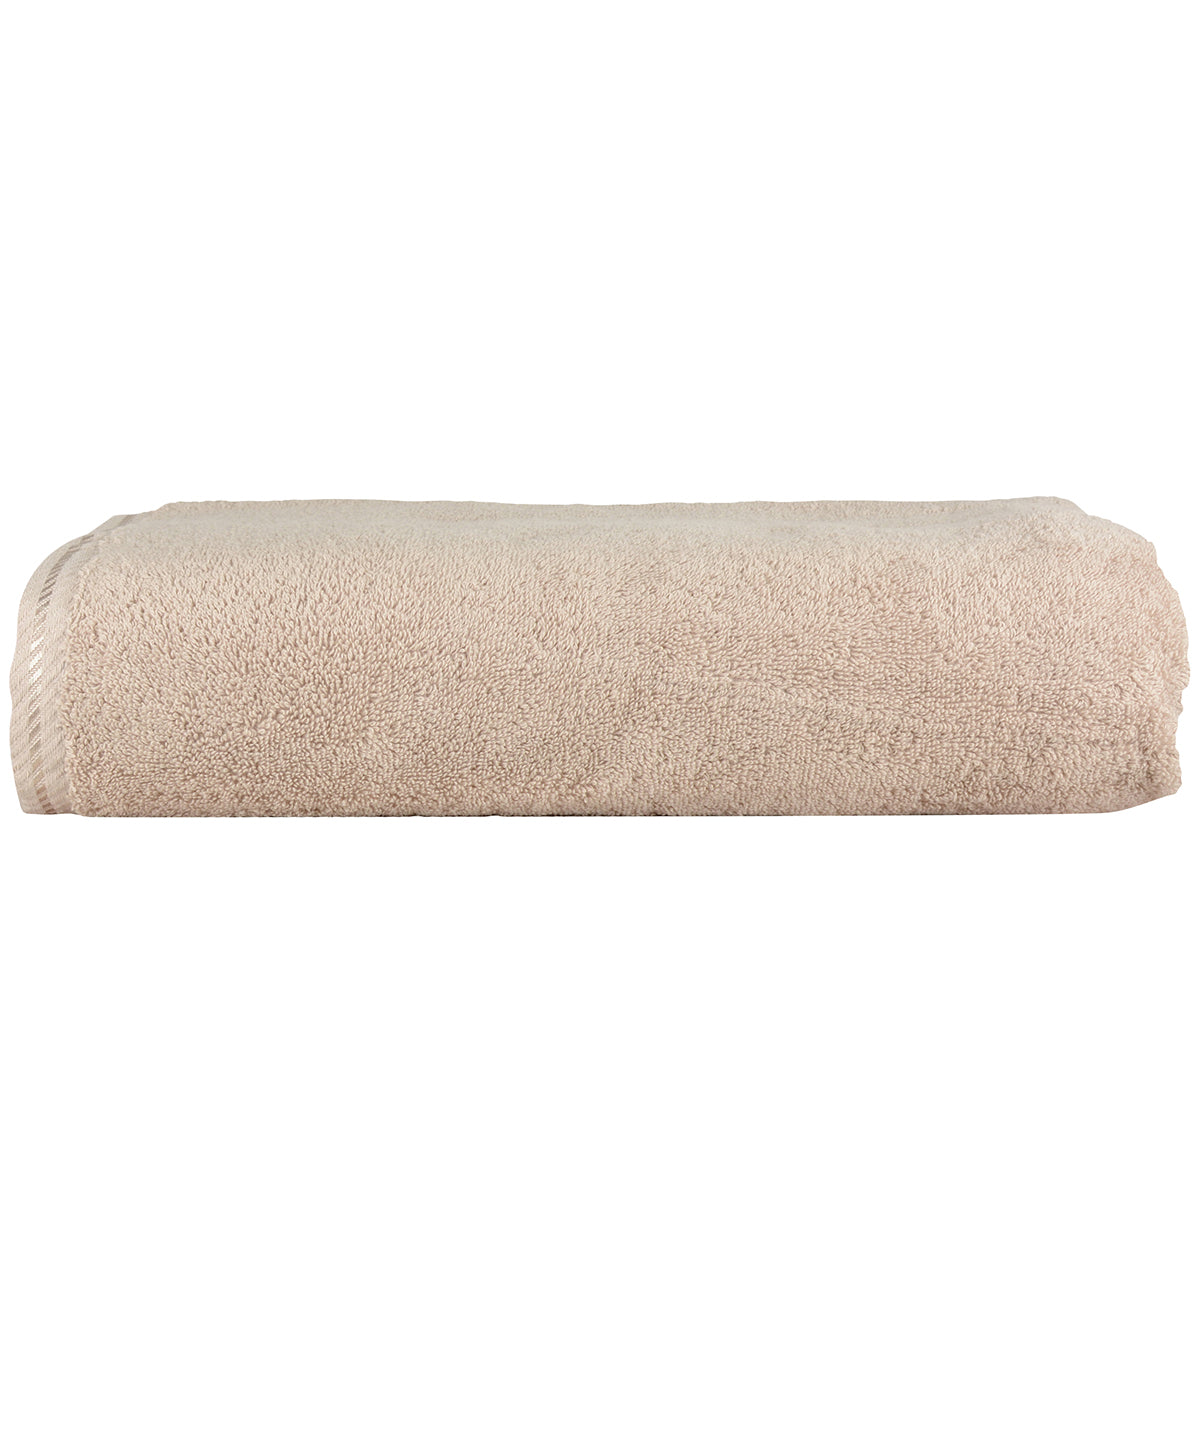 Personalised Towels - Natural A&R Towels ARTG® Big towel